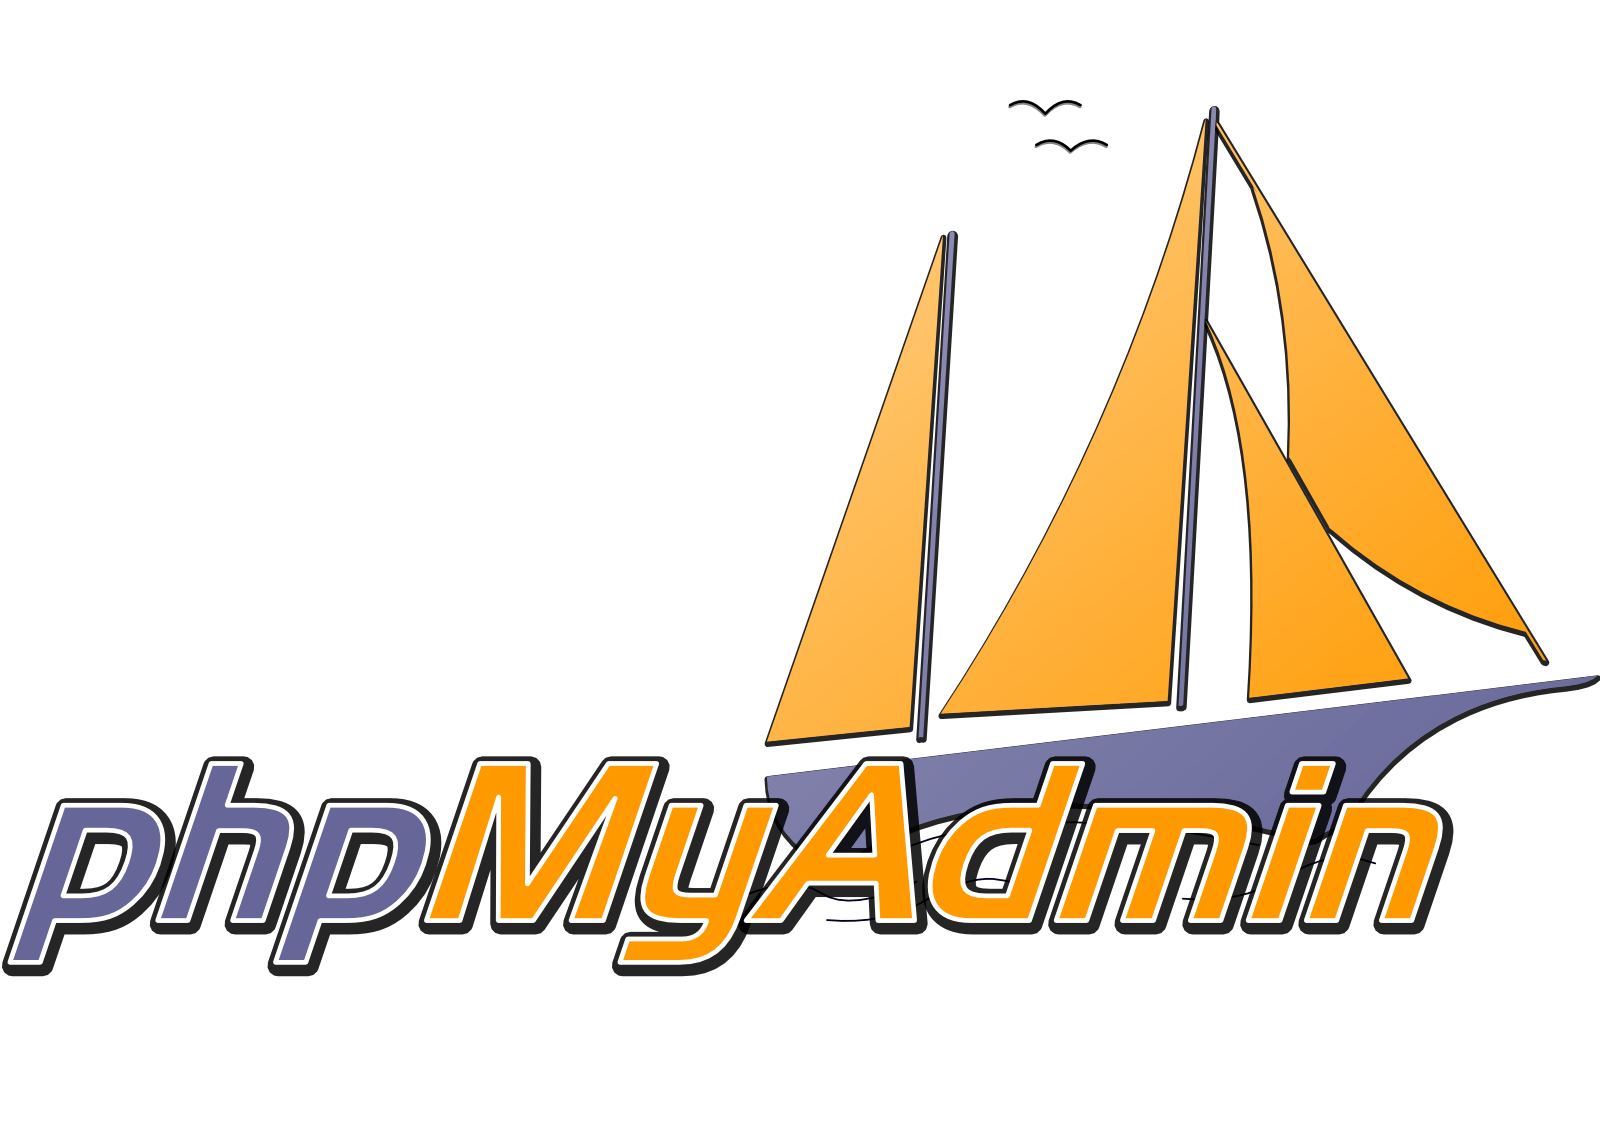 PHPMYADMIN. PHPMYADMIN картинка. PHPMYADMIN иконка. MYSQL PHPMYADMIN логотип.